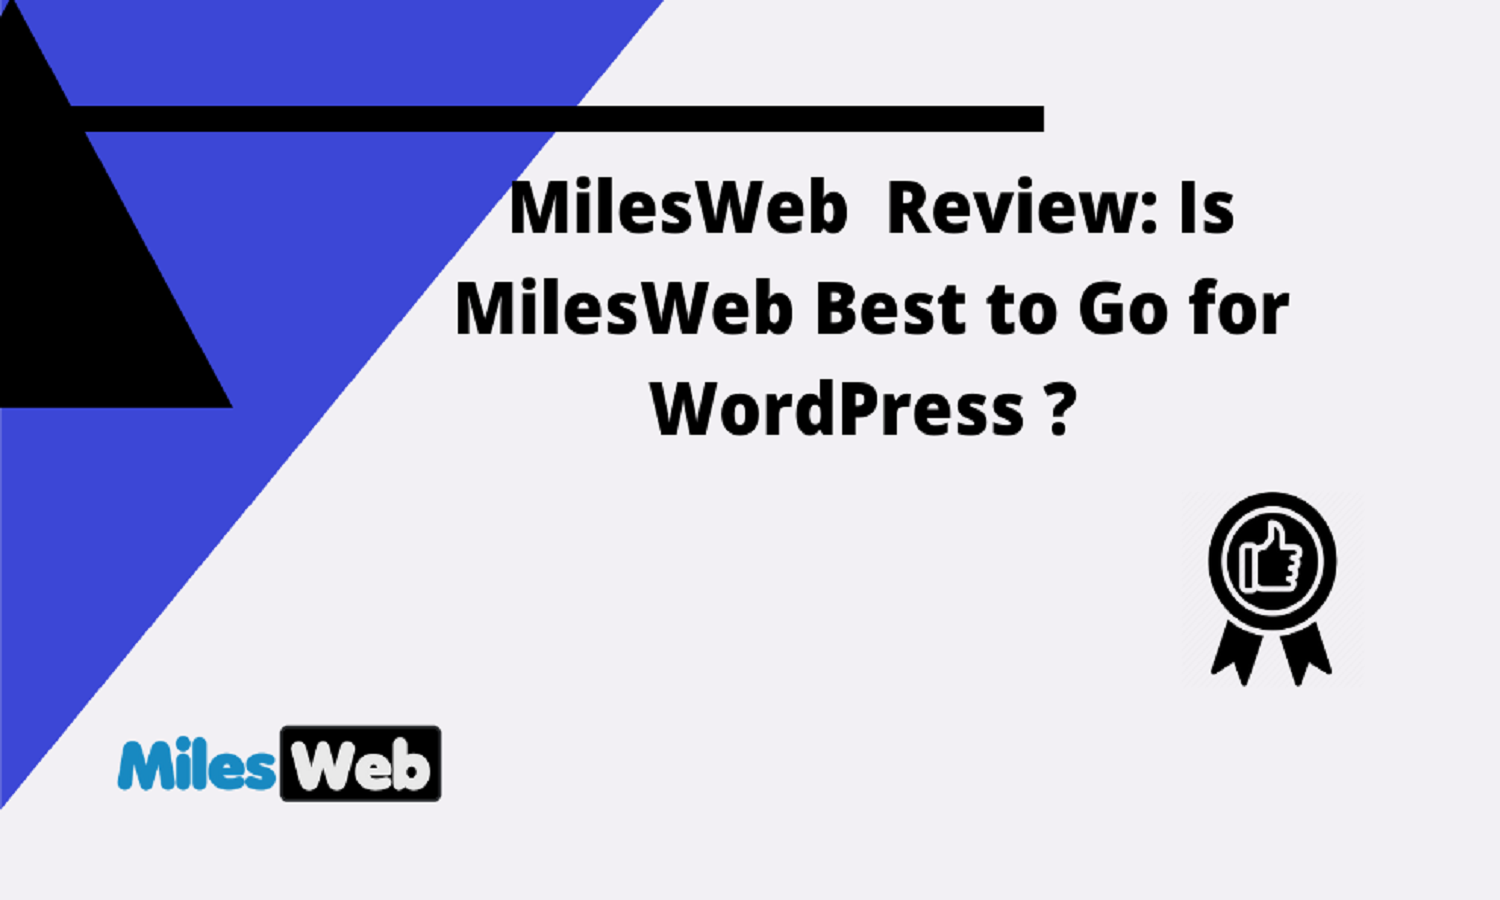 MilesWeb Review: Is MilesWeb Best to Go for WordPress?